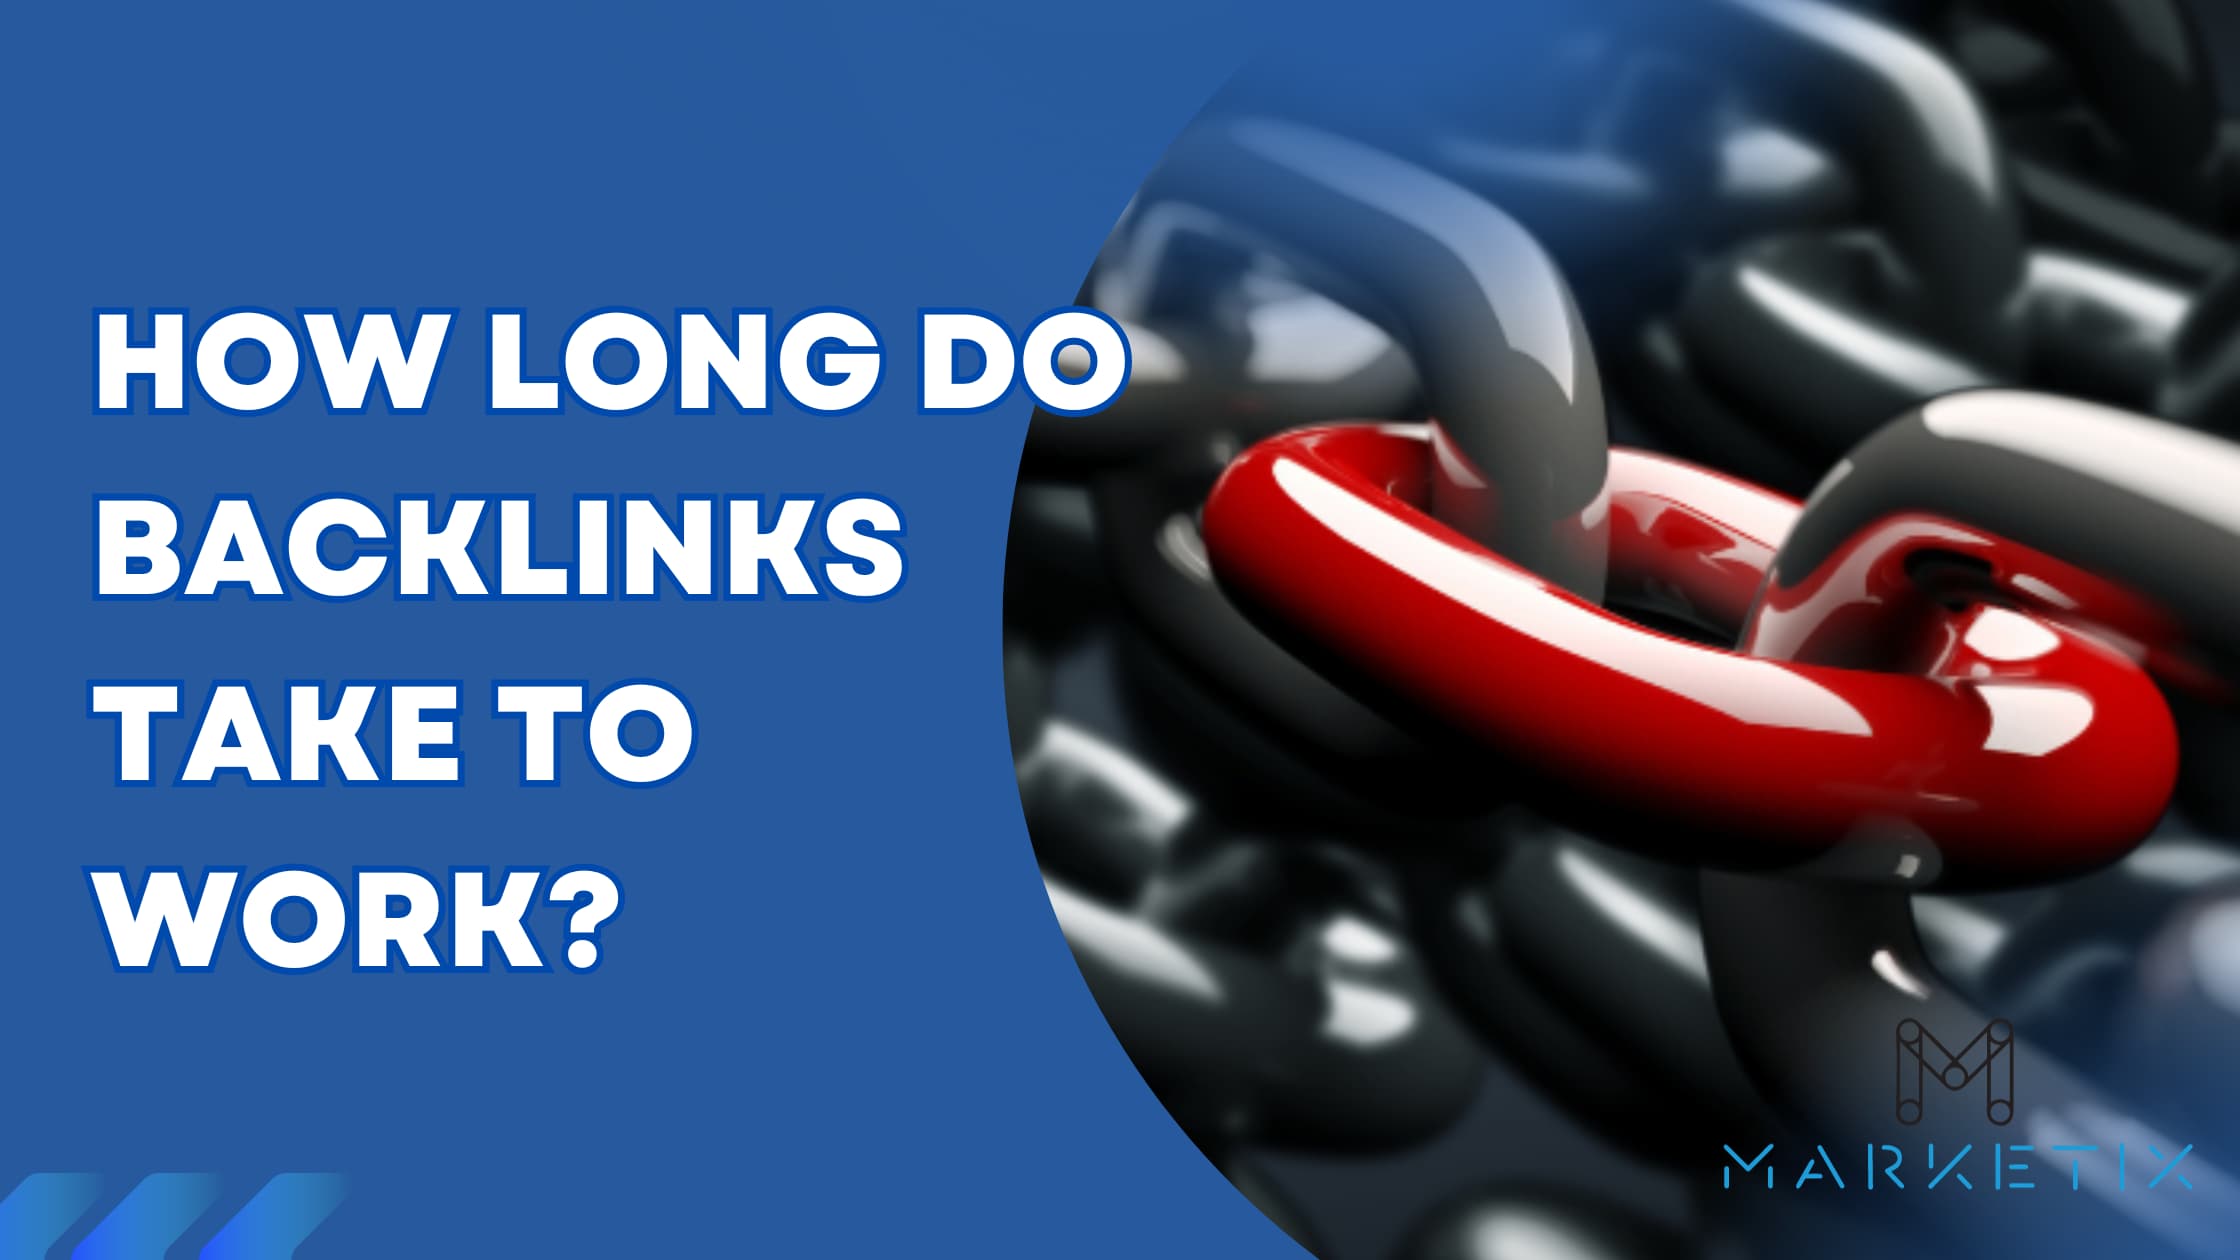 How long do backlinks take to work